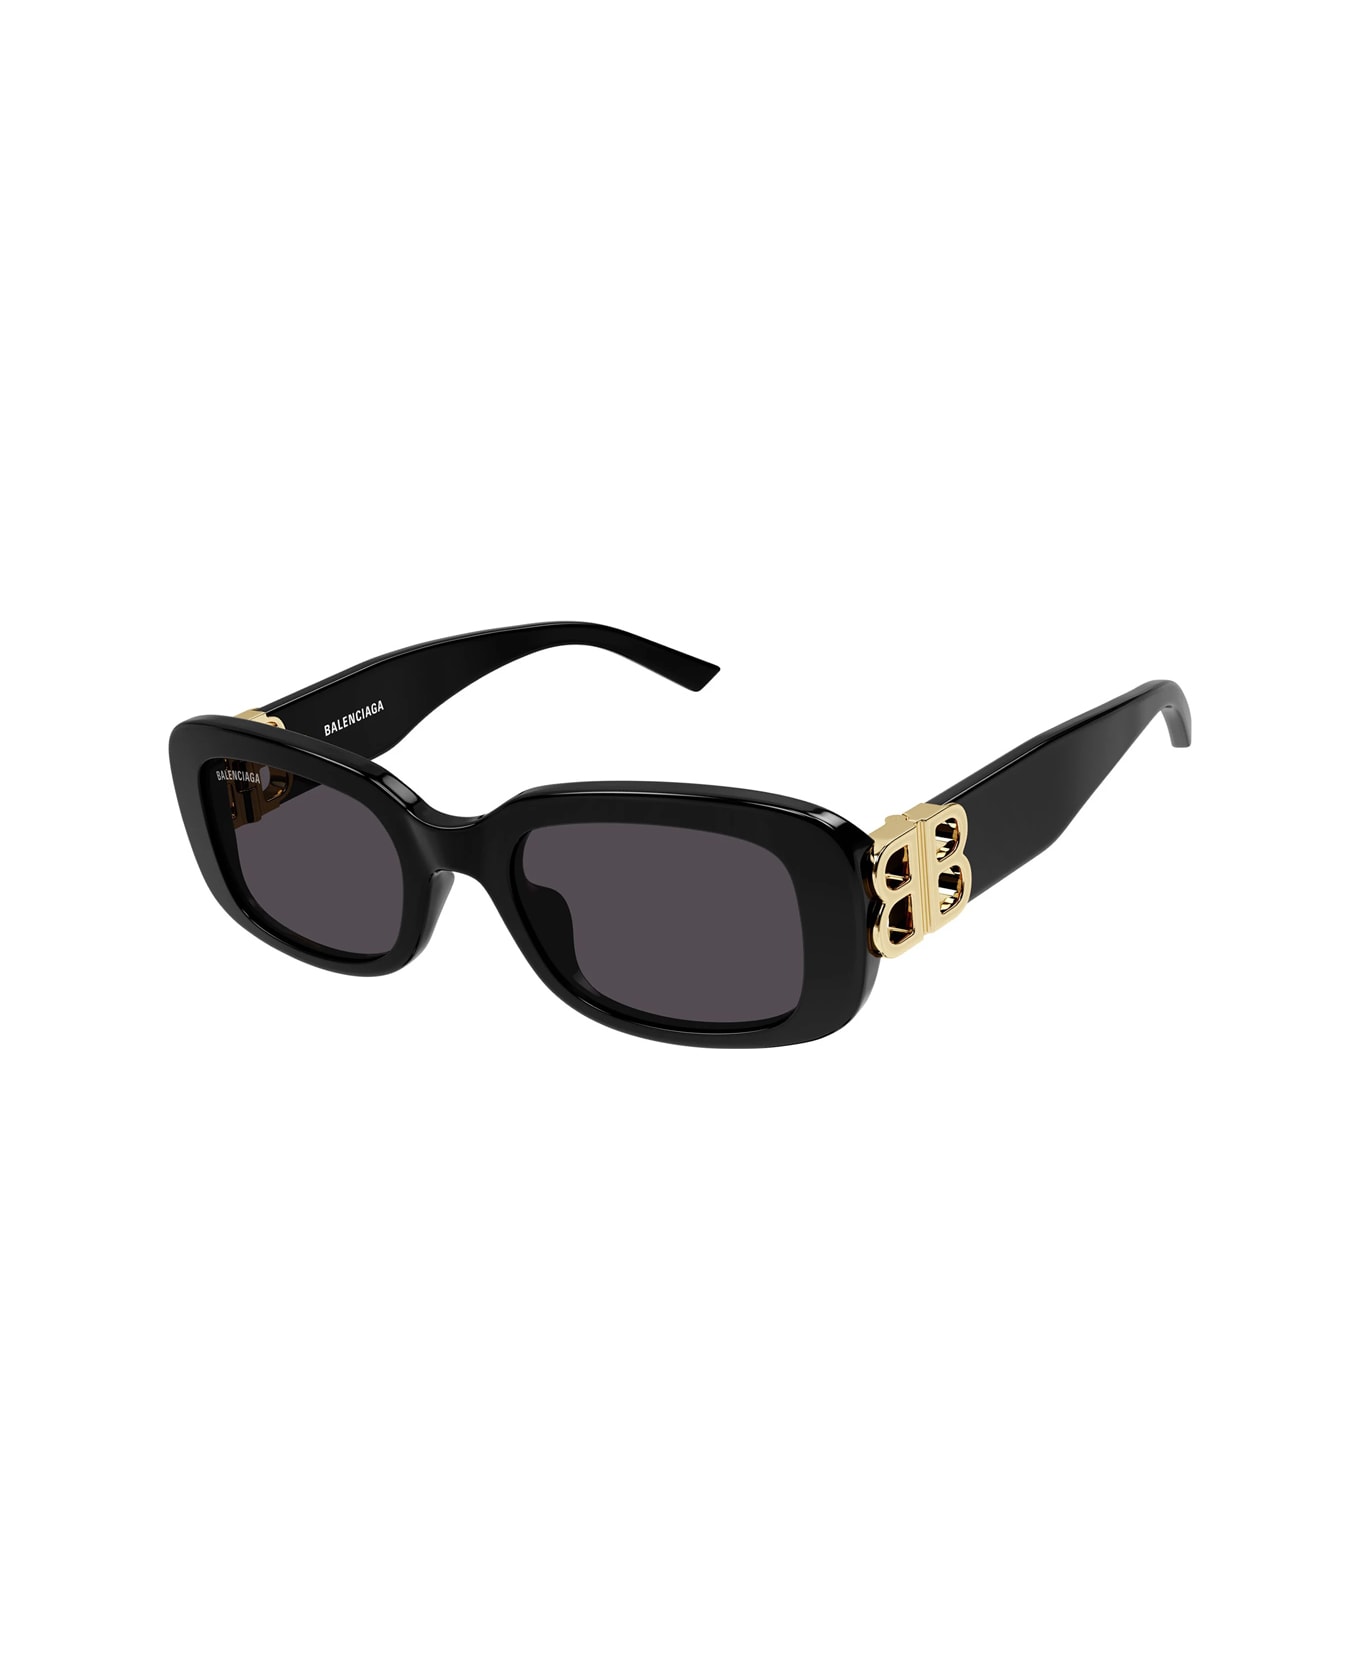 Balenciaga Eyewear Bb0310sk 001 Sunglasses - Nero